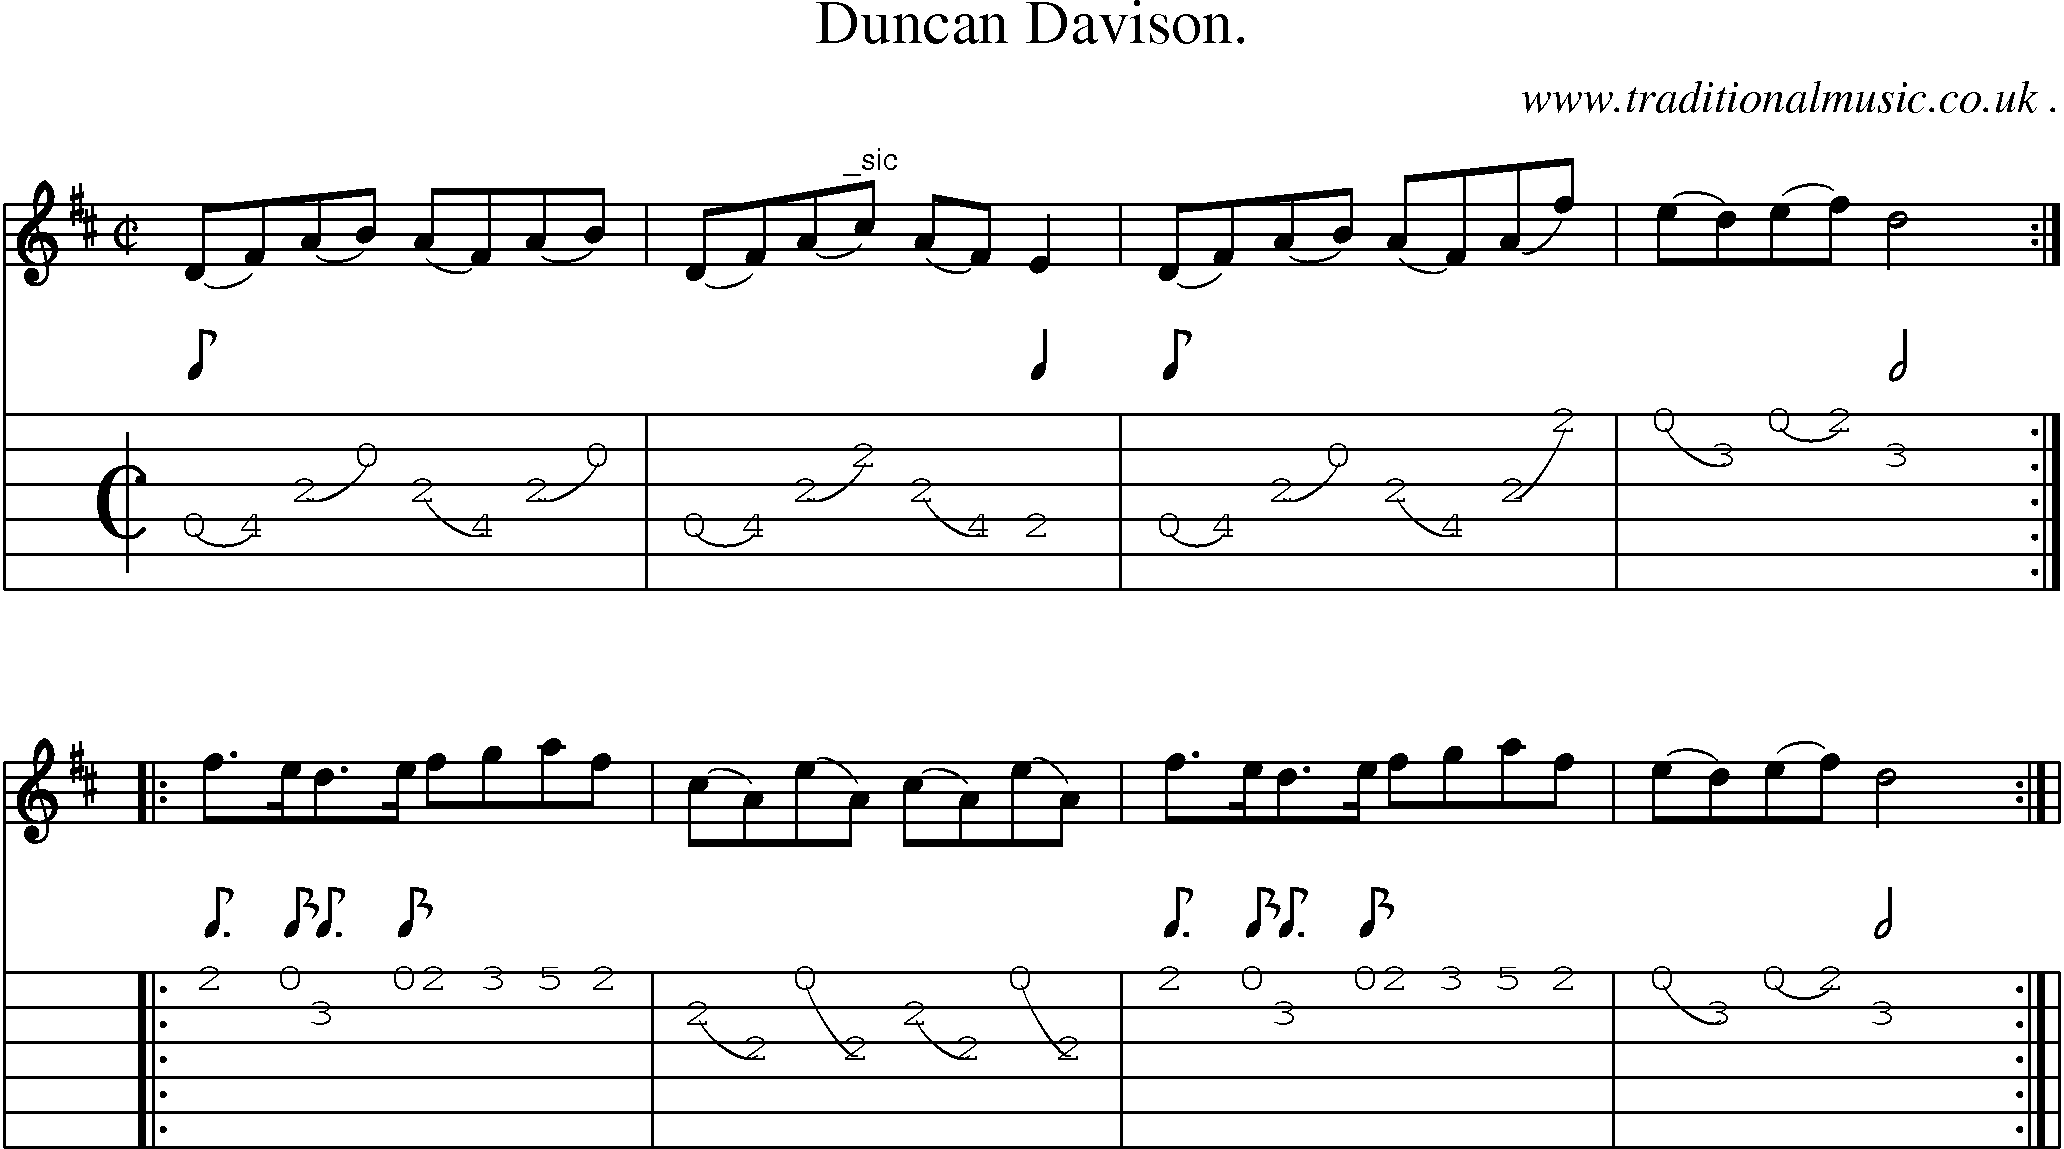 Sheet-Music and Guitar Tabs for Duncan Davison